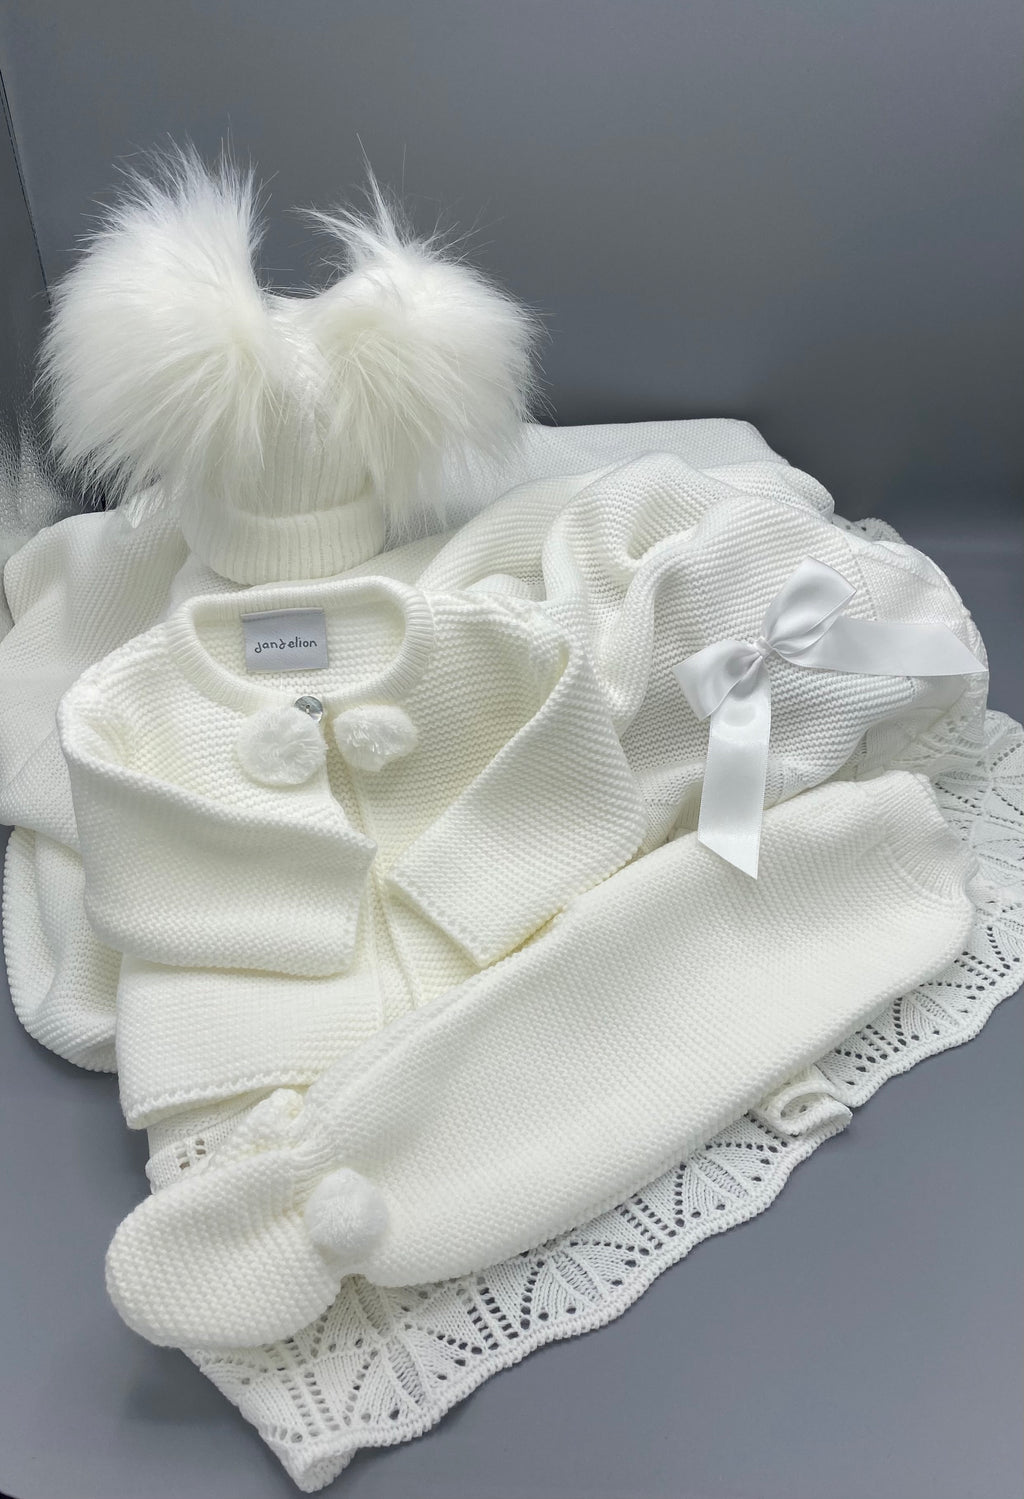 White newborn gift set